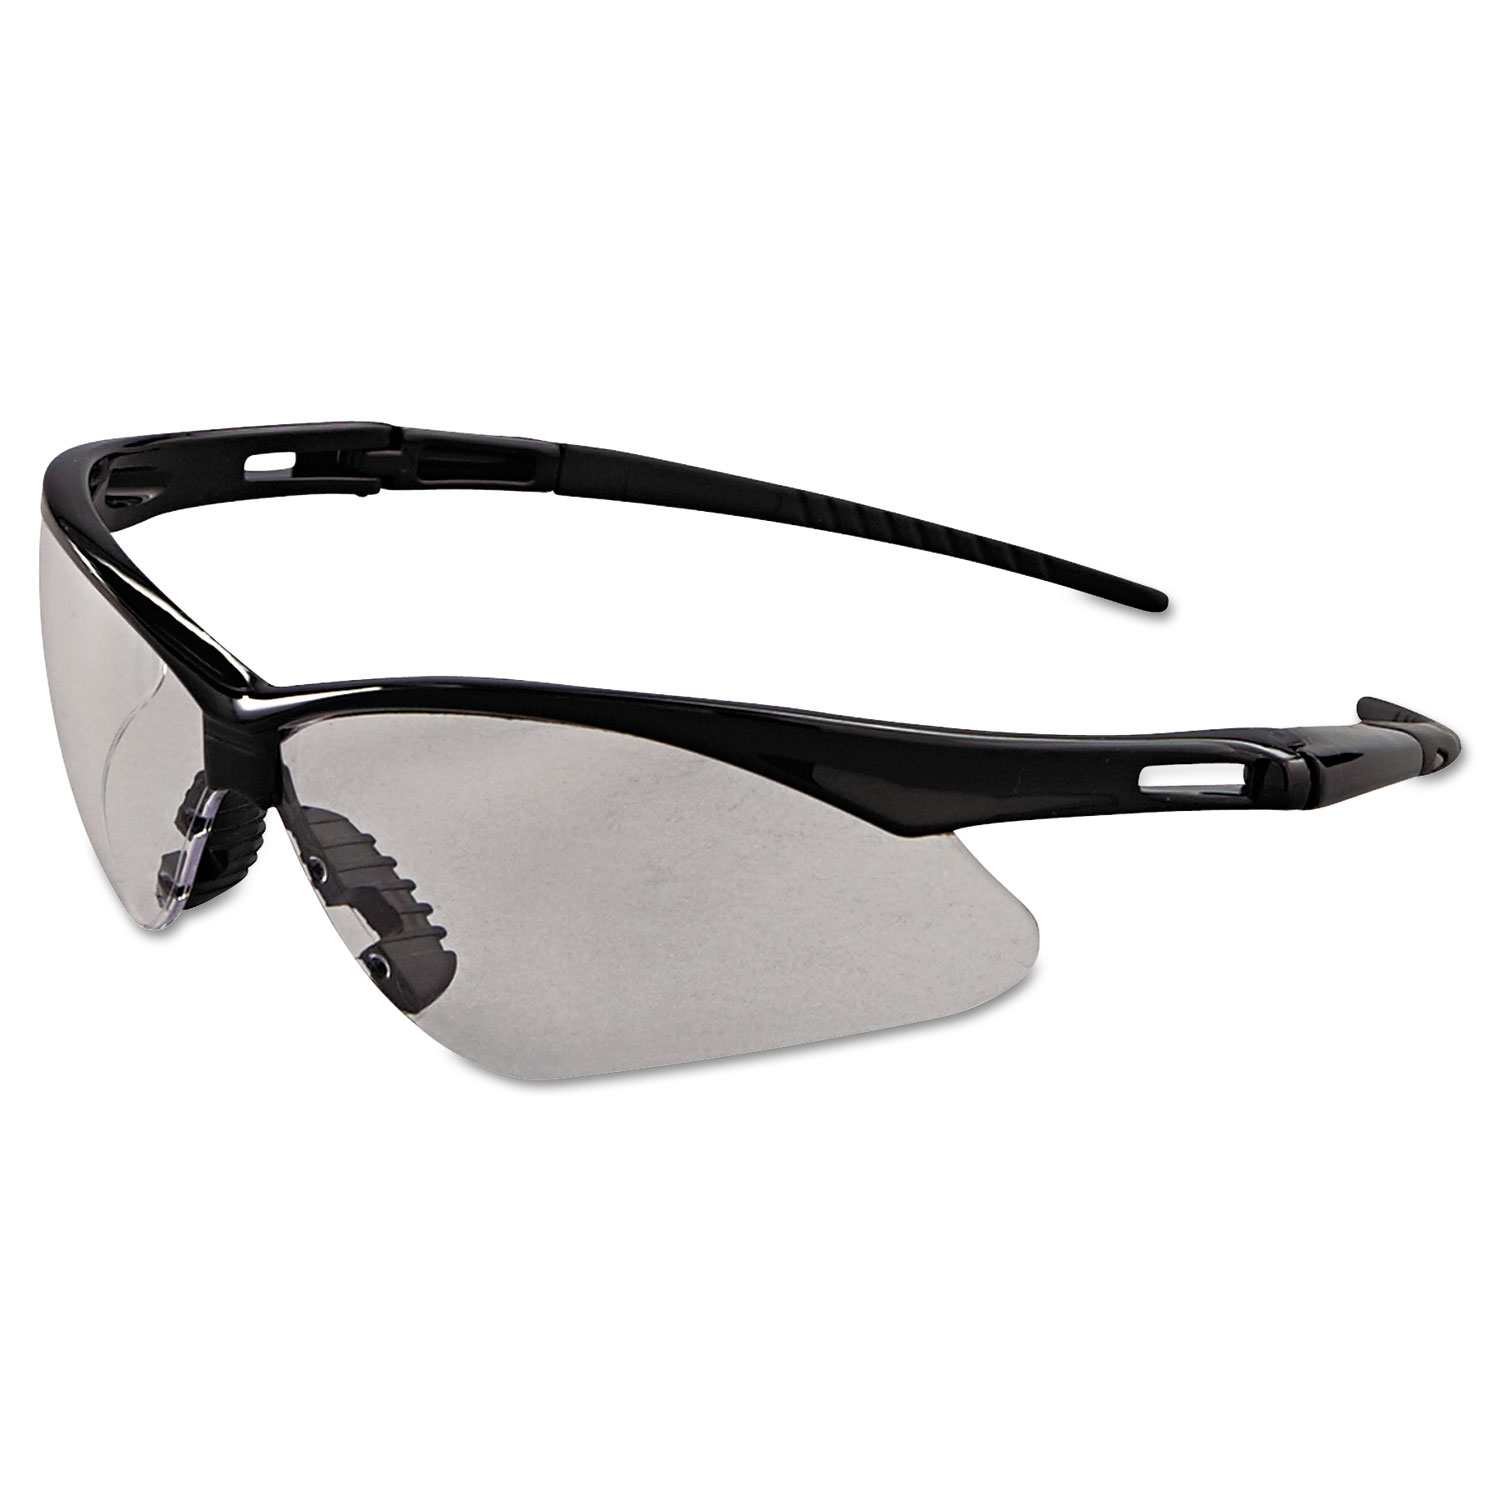  KleenGuard 25679 Nemesis Safety Glasses, Black Frame, Clear Anti-Fog Lens (KCC25679) 